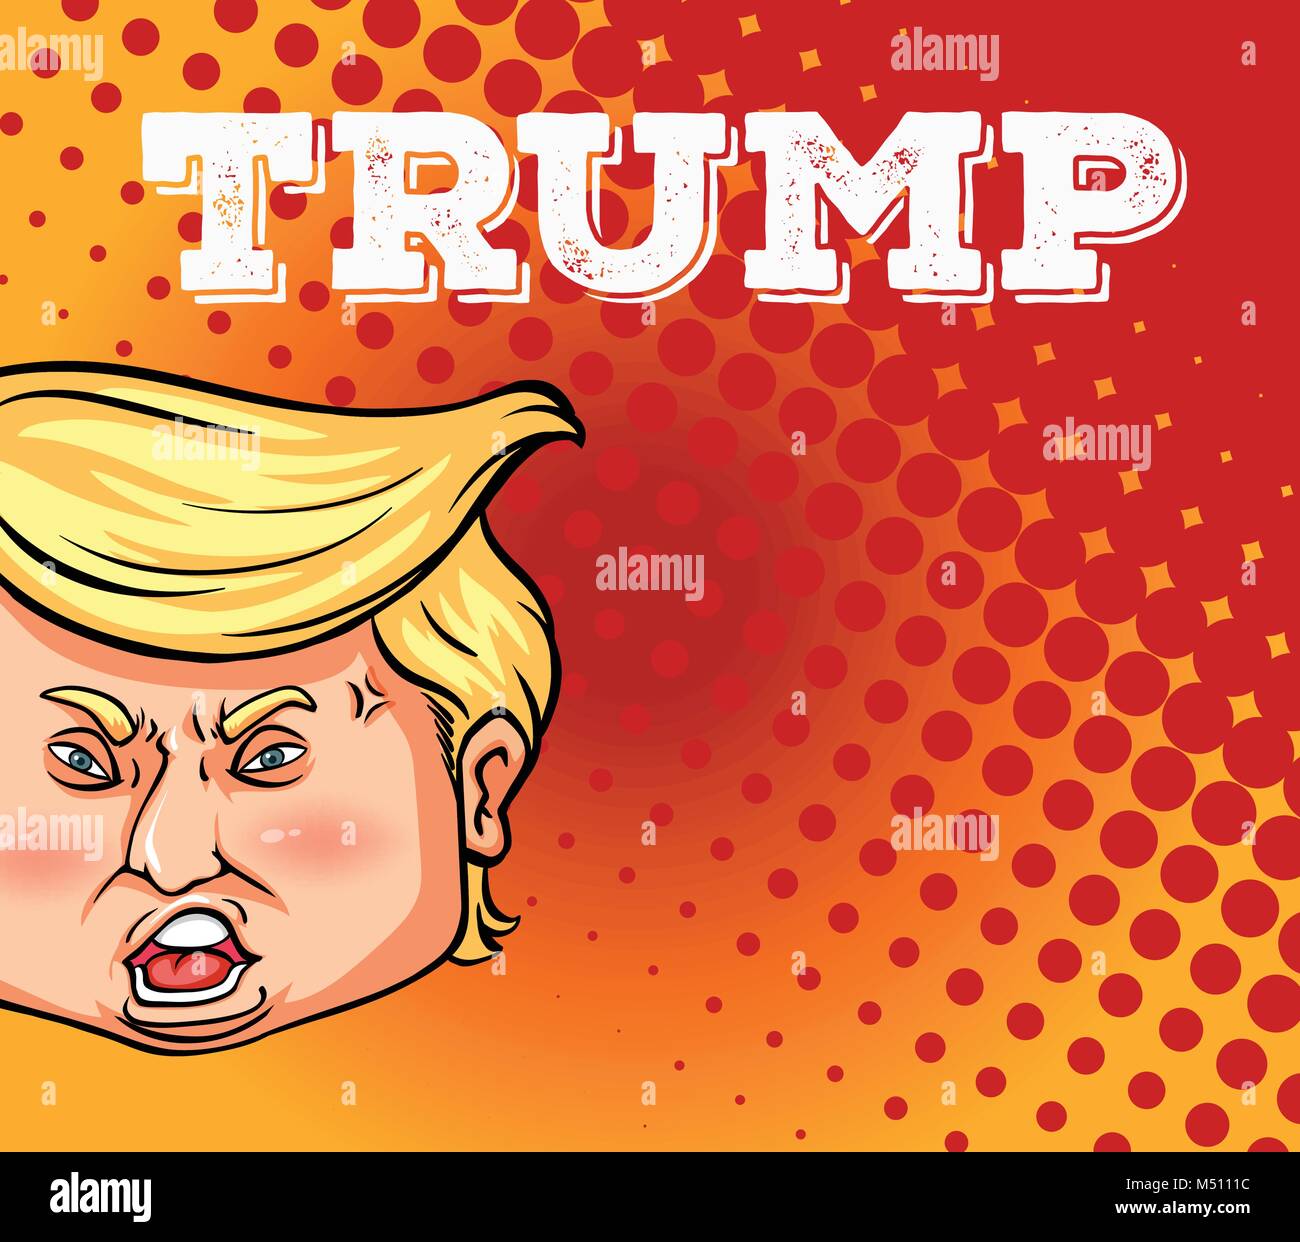 US president Trump on poster illustration Stock Vector